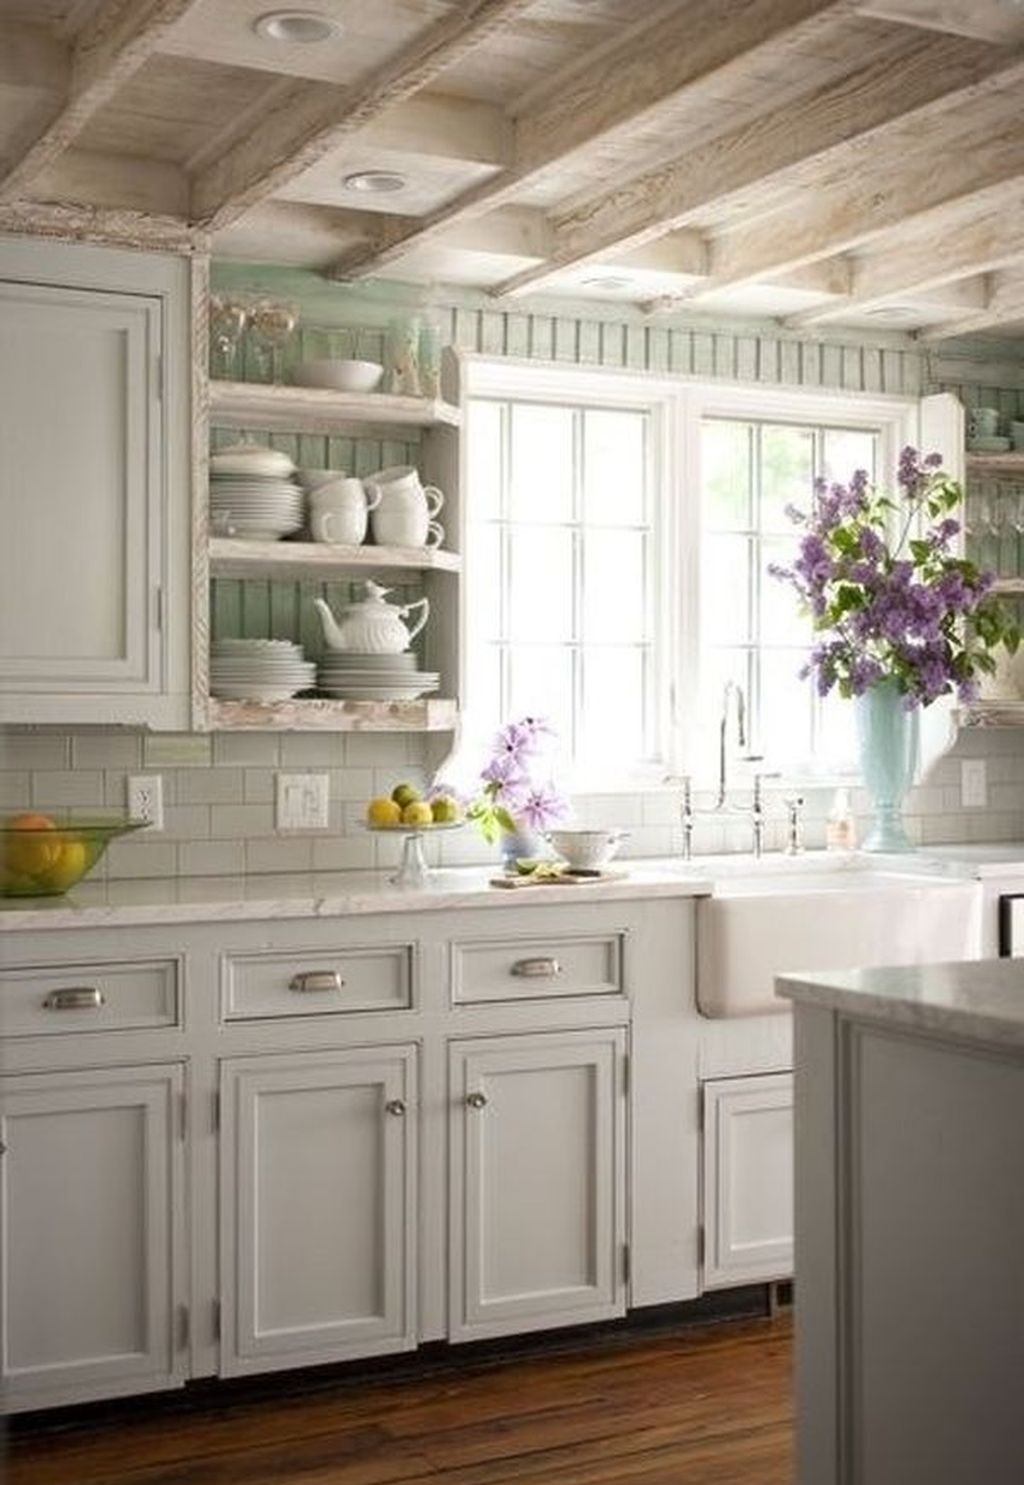  white rustic kitchen cabinets